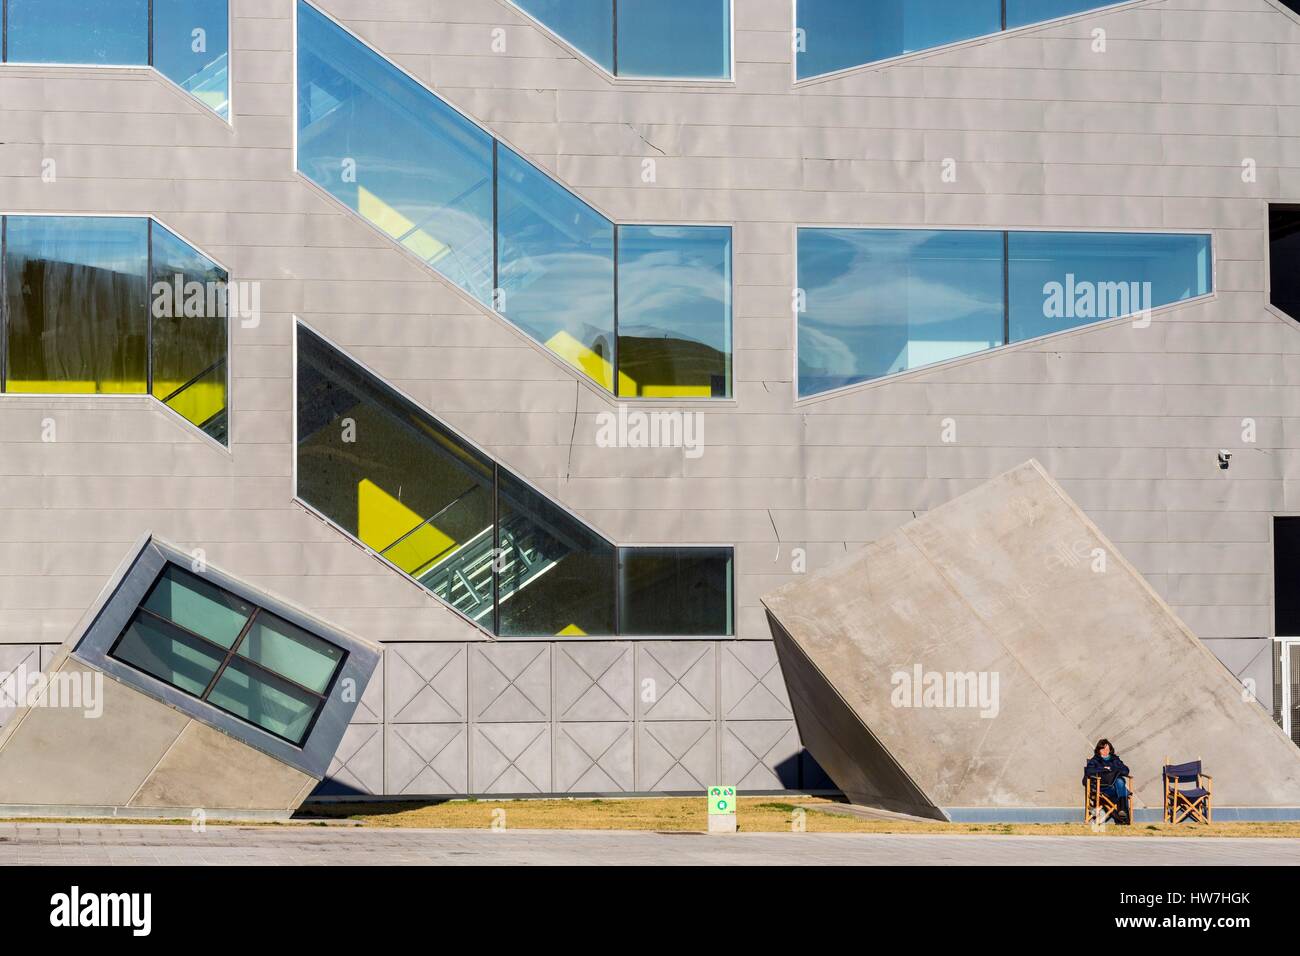 Spain, Catalonia, Barcelona, Placa de les Glories Catalanes, Museu del Disseny, the Design Museum (2014) with the architectural firm MBM Arquitectes, parvis Stock Photo